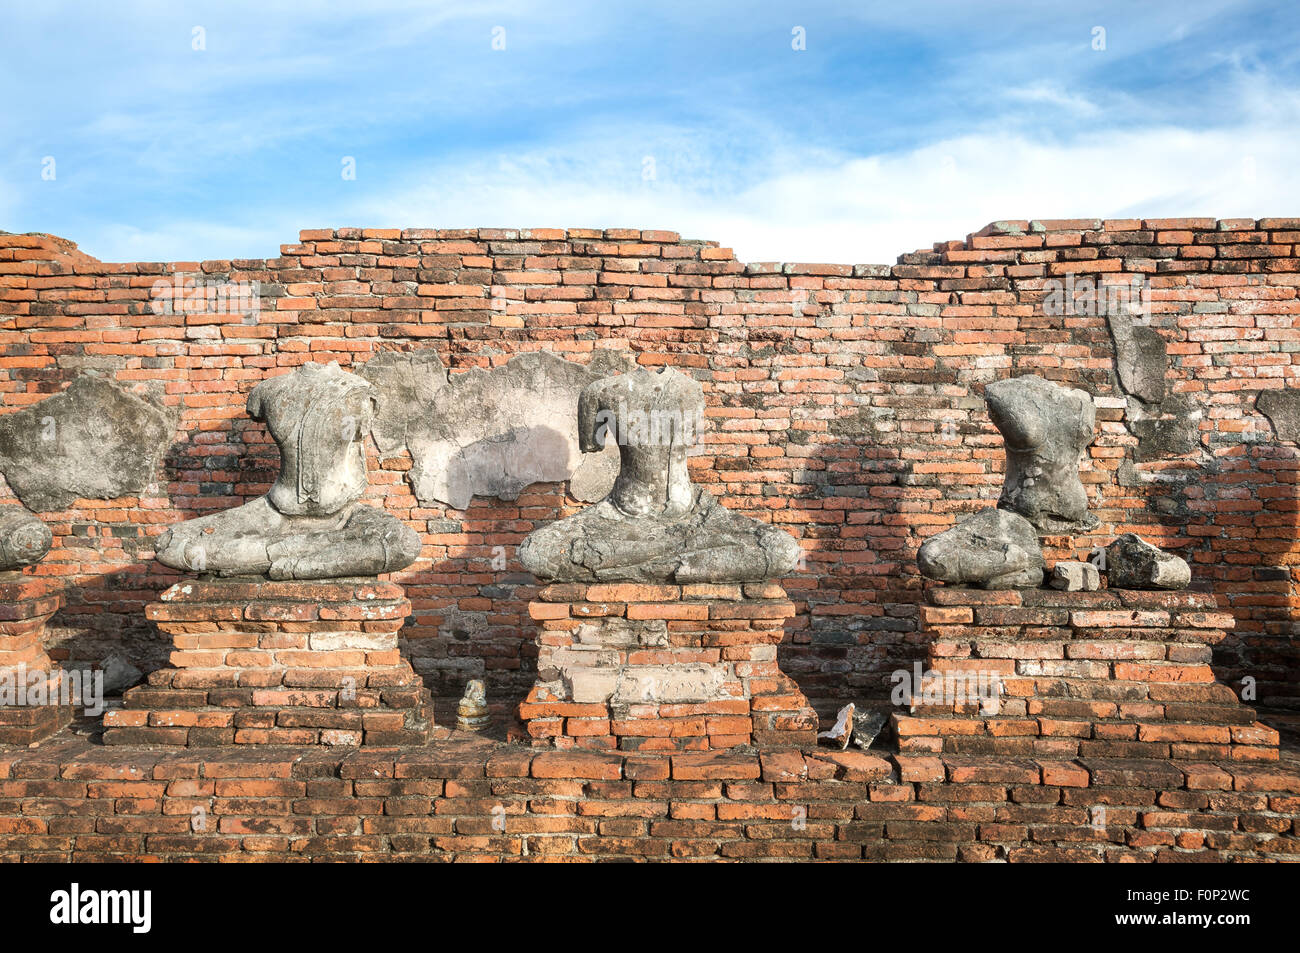 Headless Buddha statues at Wat Chaiwatthanaram, Ayutthaya, Thailand Stock Photo